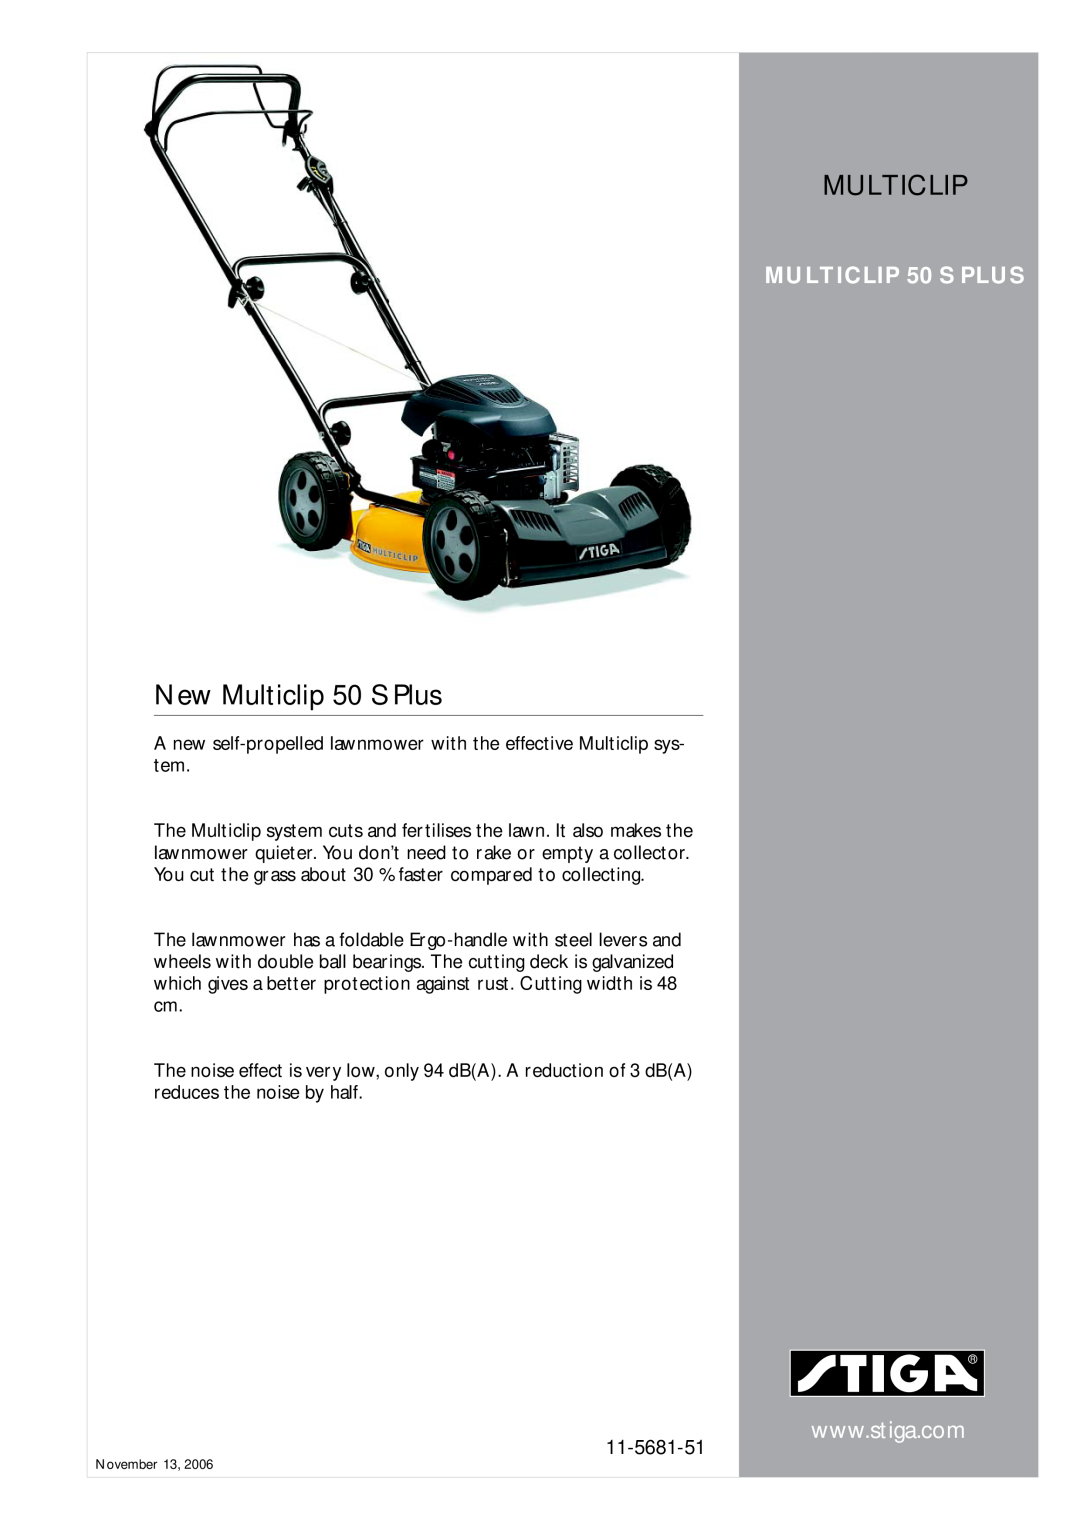 Stiga 11-5681-51 manual New Multiclip 50 S Plus, MULTICLIP 50 S PLUS 